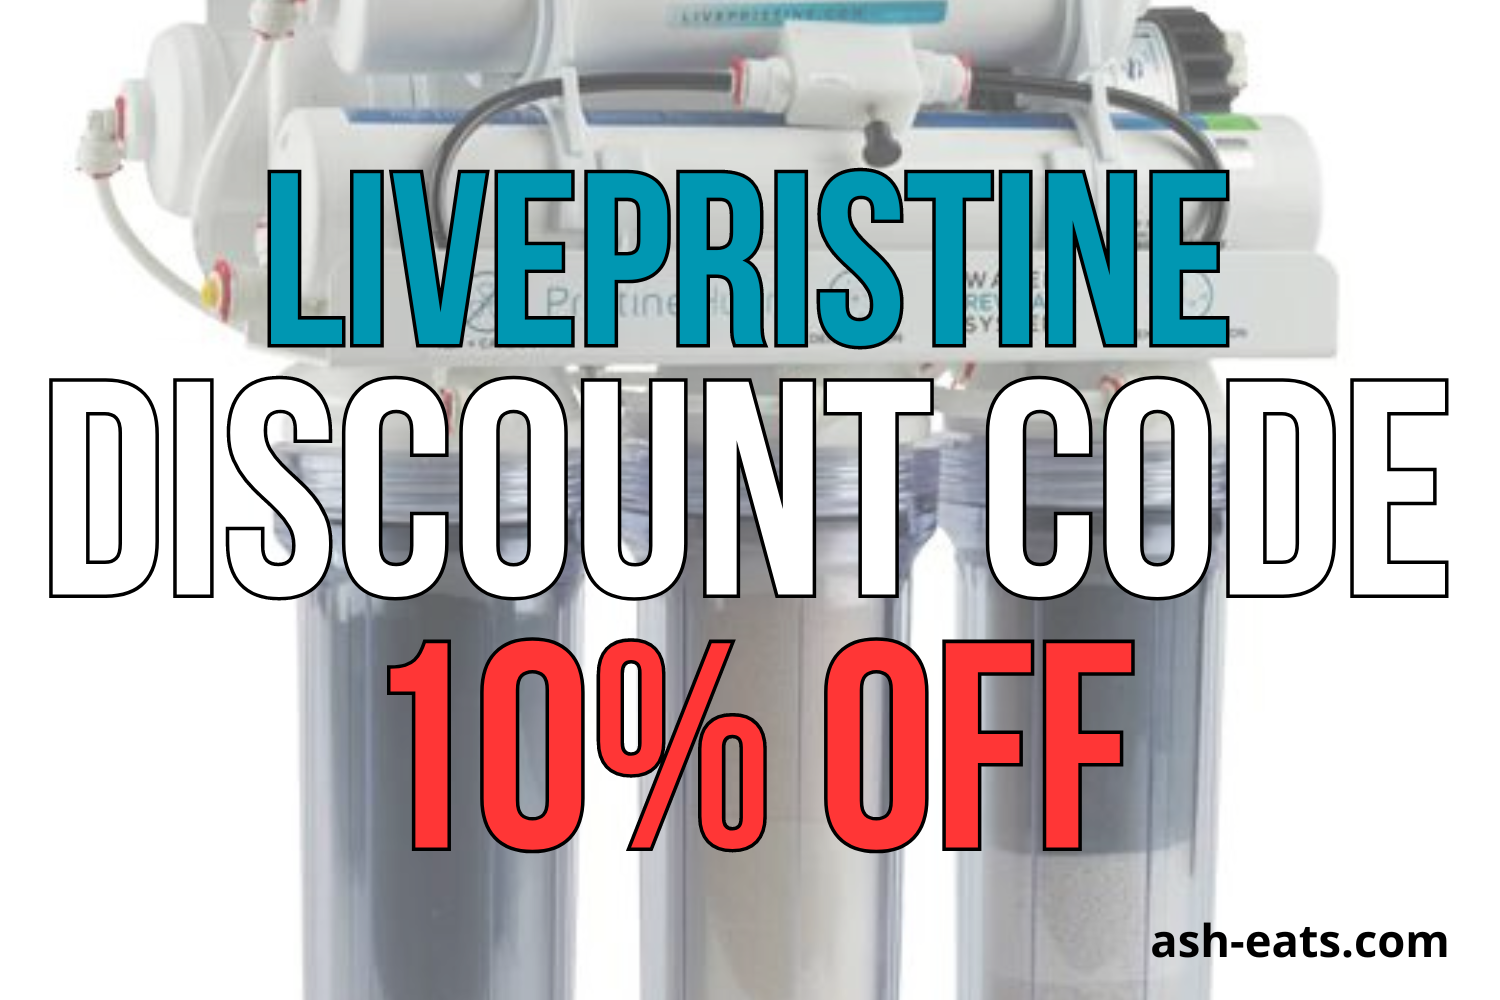 livepristine discount code